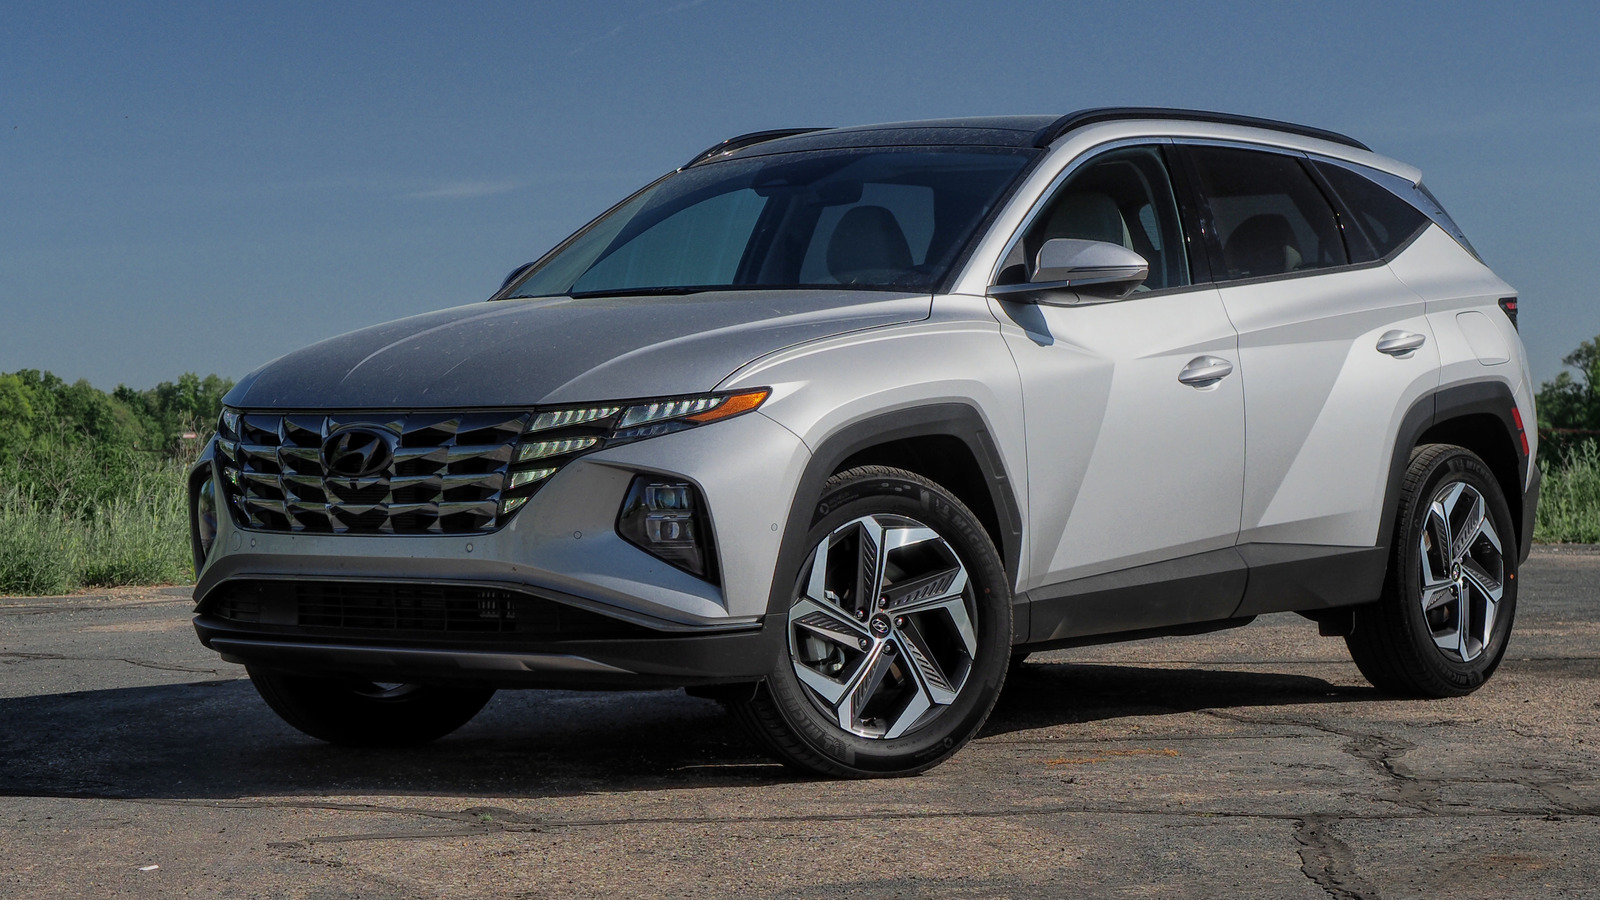 2023 Hyundai Tucson Hybrid Review: Electrification Without The Headaches – SlashGear